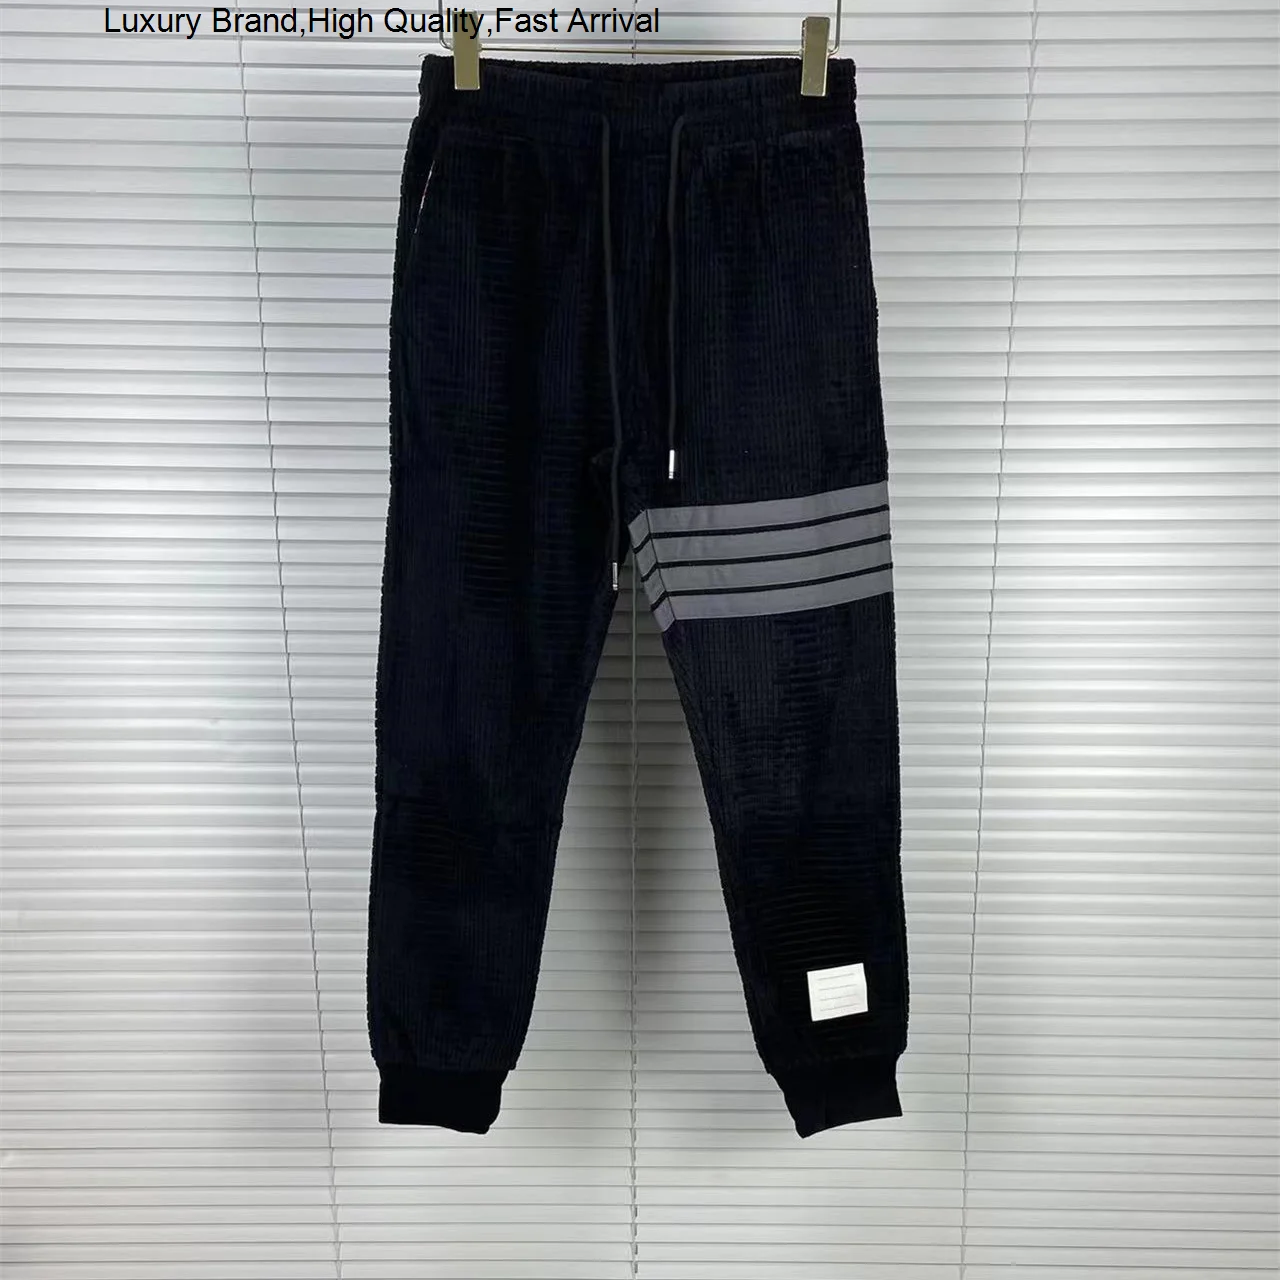 Fashion High-end Men's Brand Pants Original Corduroy Fabric Design Women's Luxury Trousers Famous Unisex High Quality Sweatpants